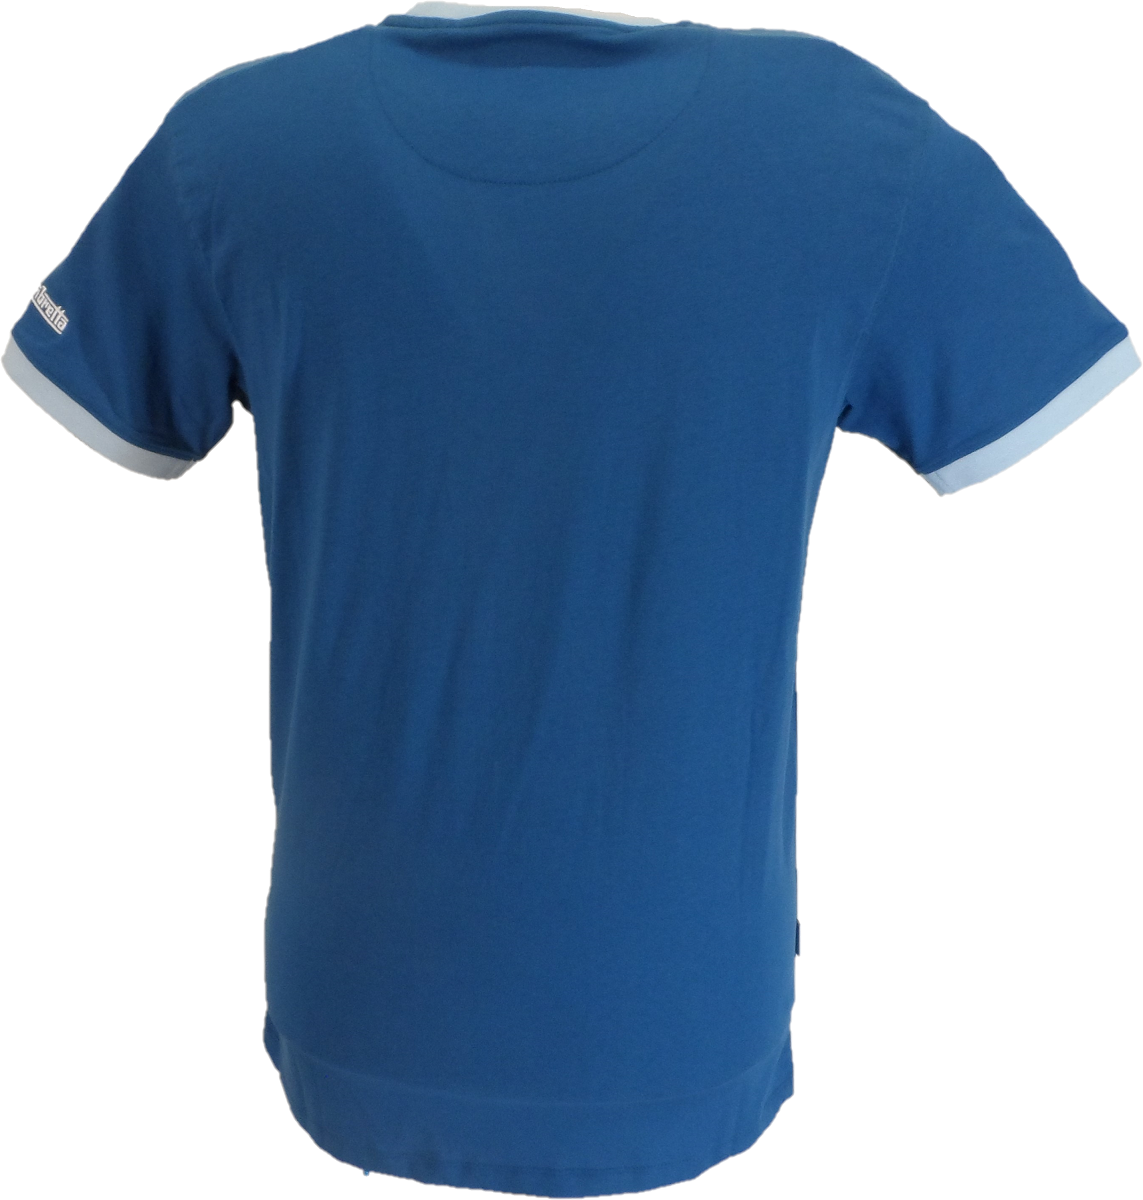 Lambretta Dark Blue Retro Target Ringer T-Shirt